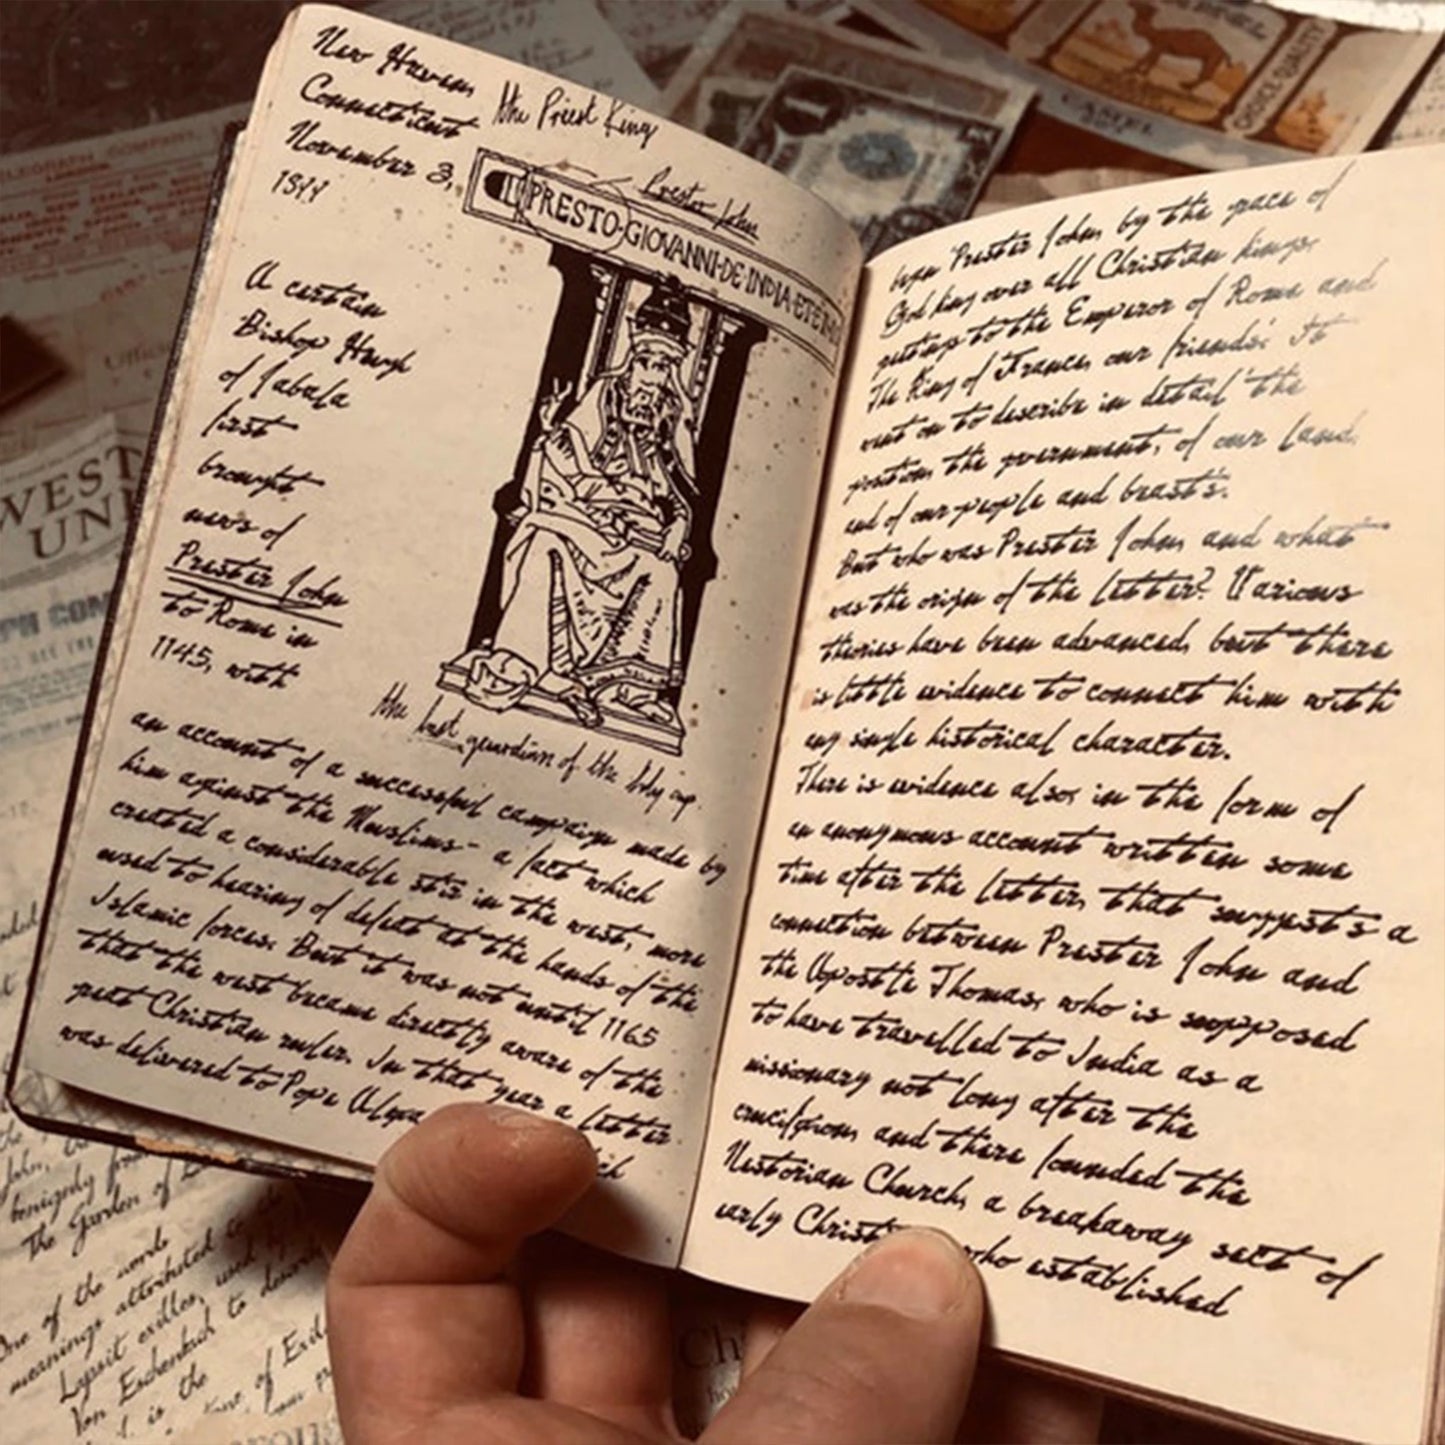 Indiana Jones Memorabilia: Travel Journal